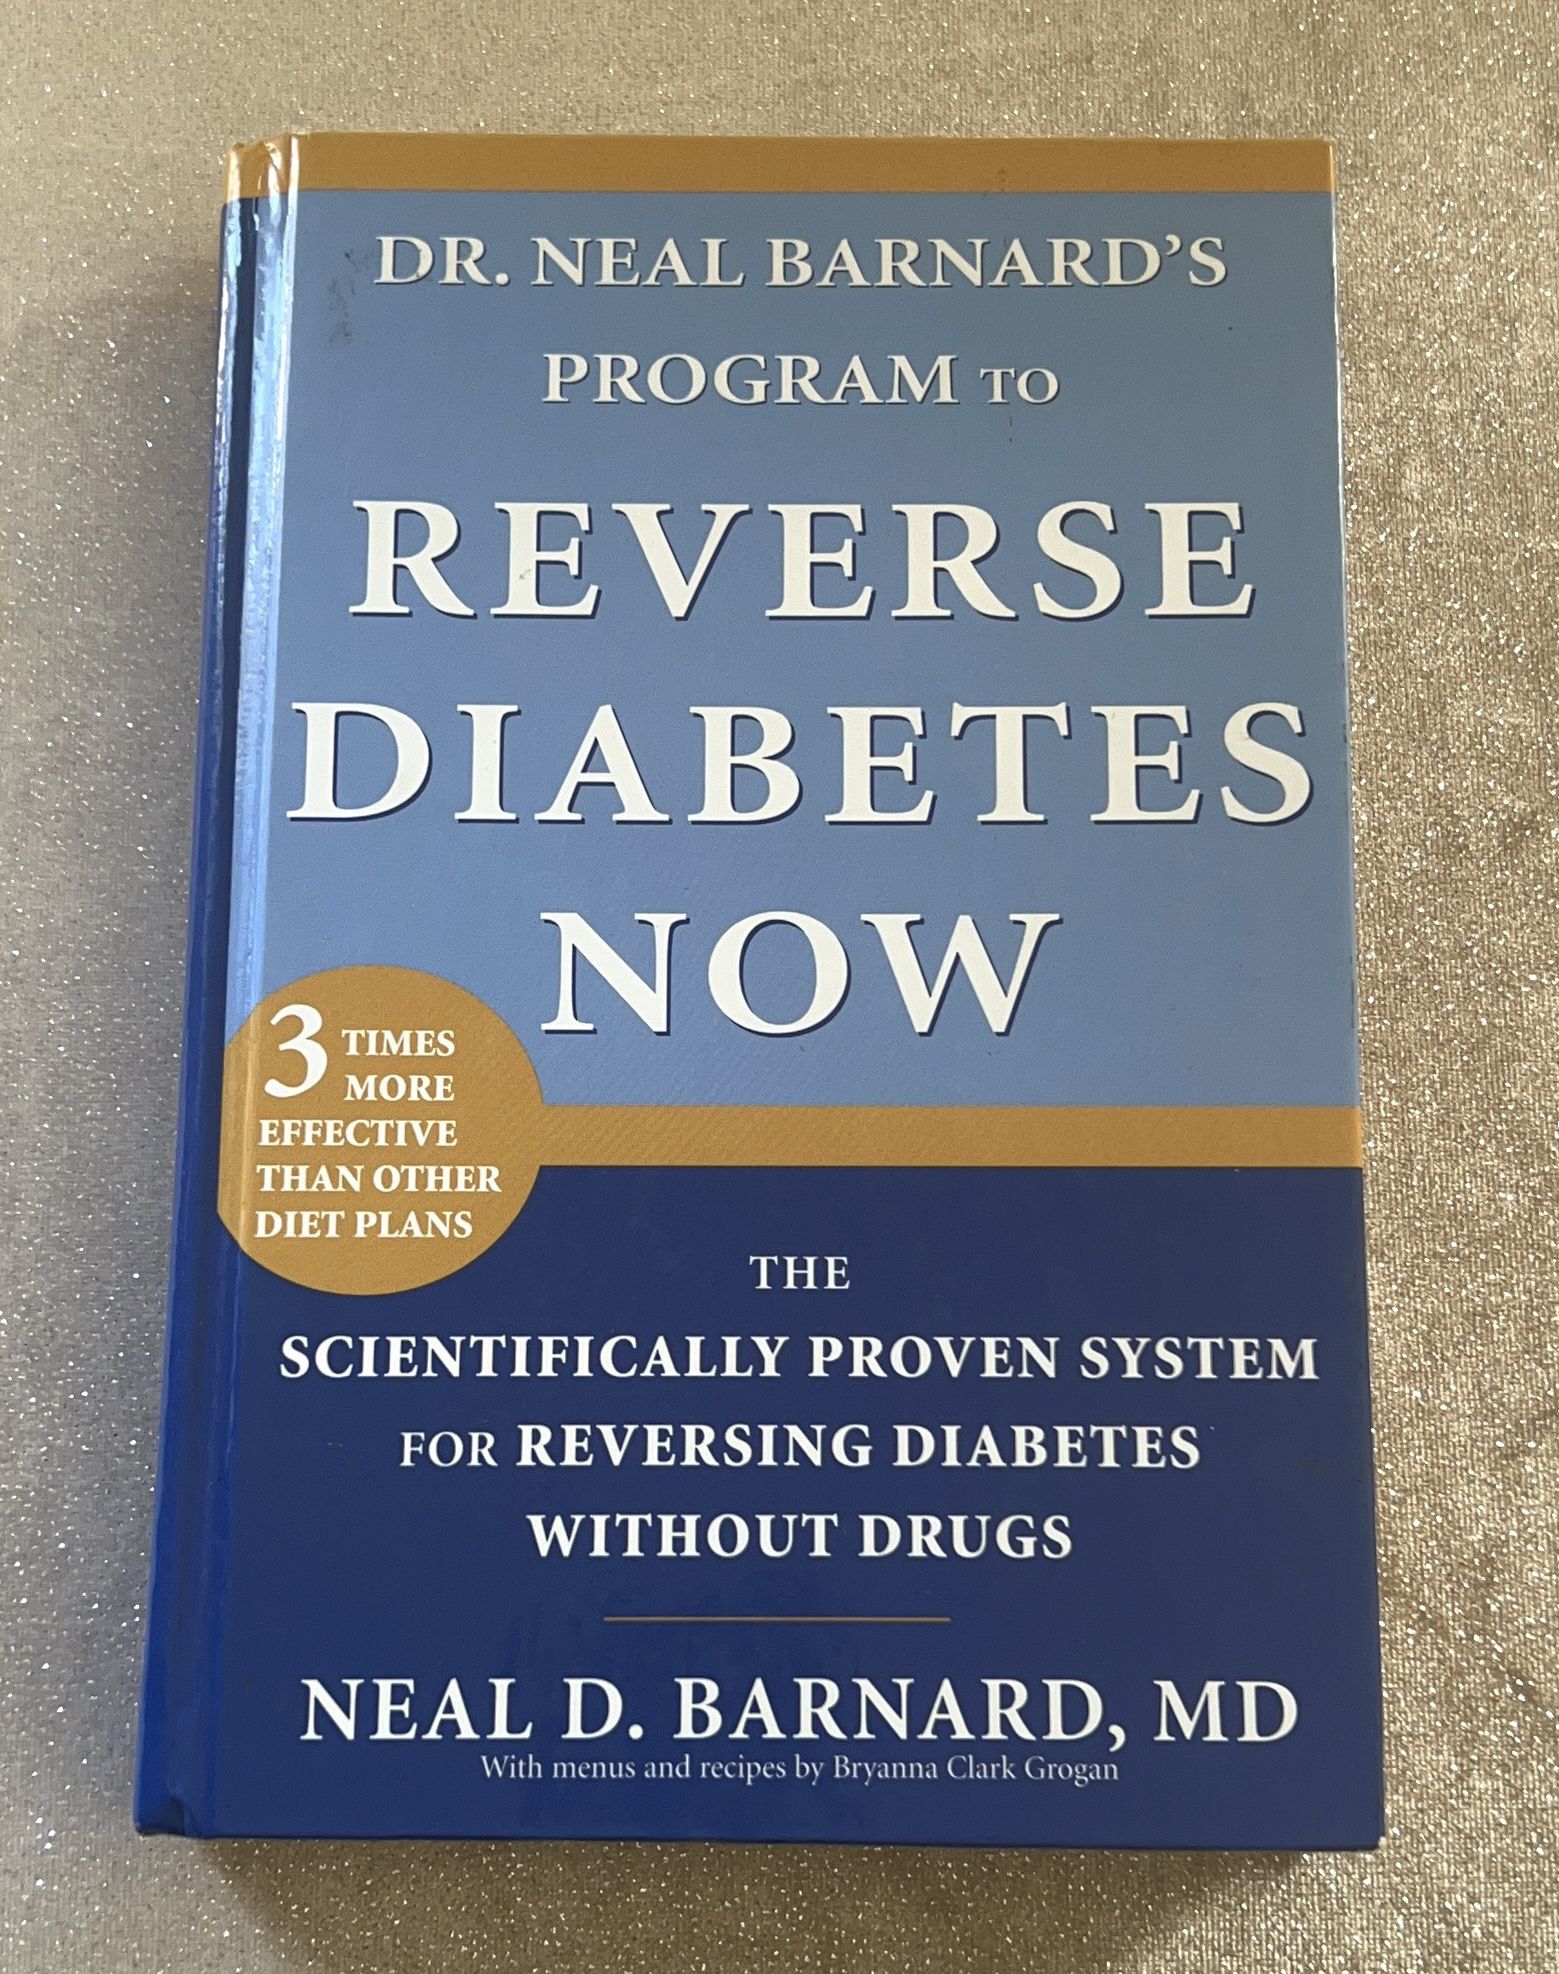 Reverse Diabetes Now by Neal D. Barnard